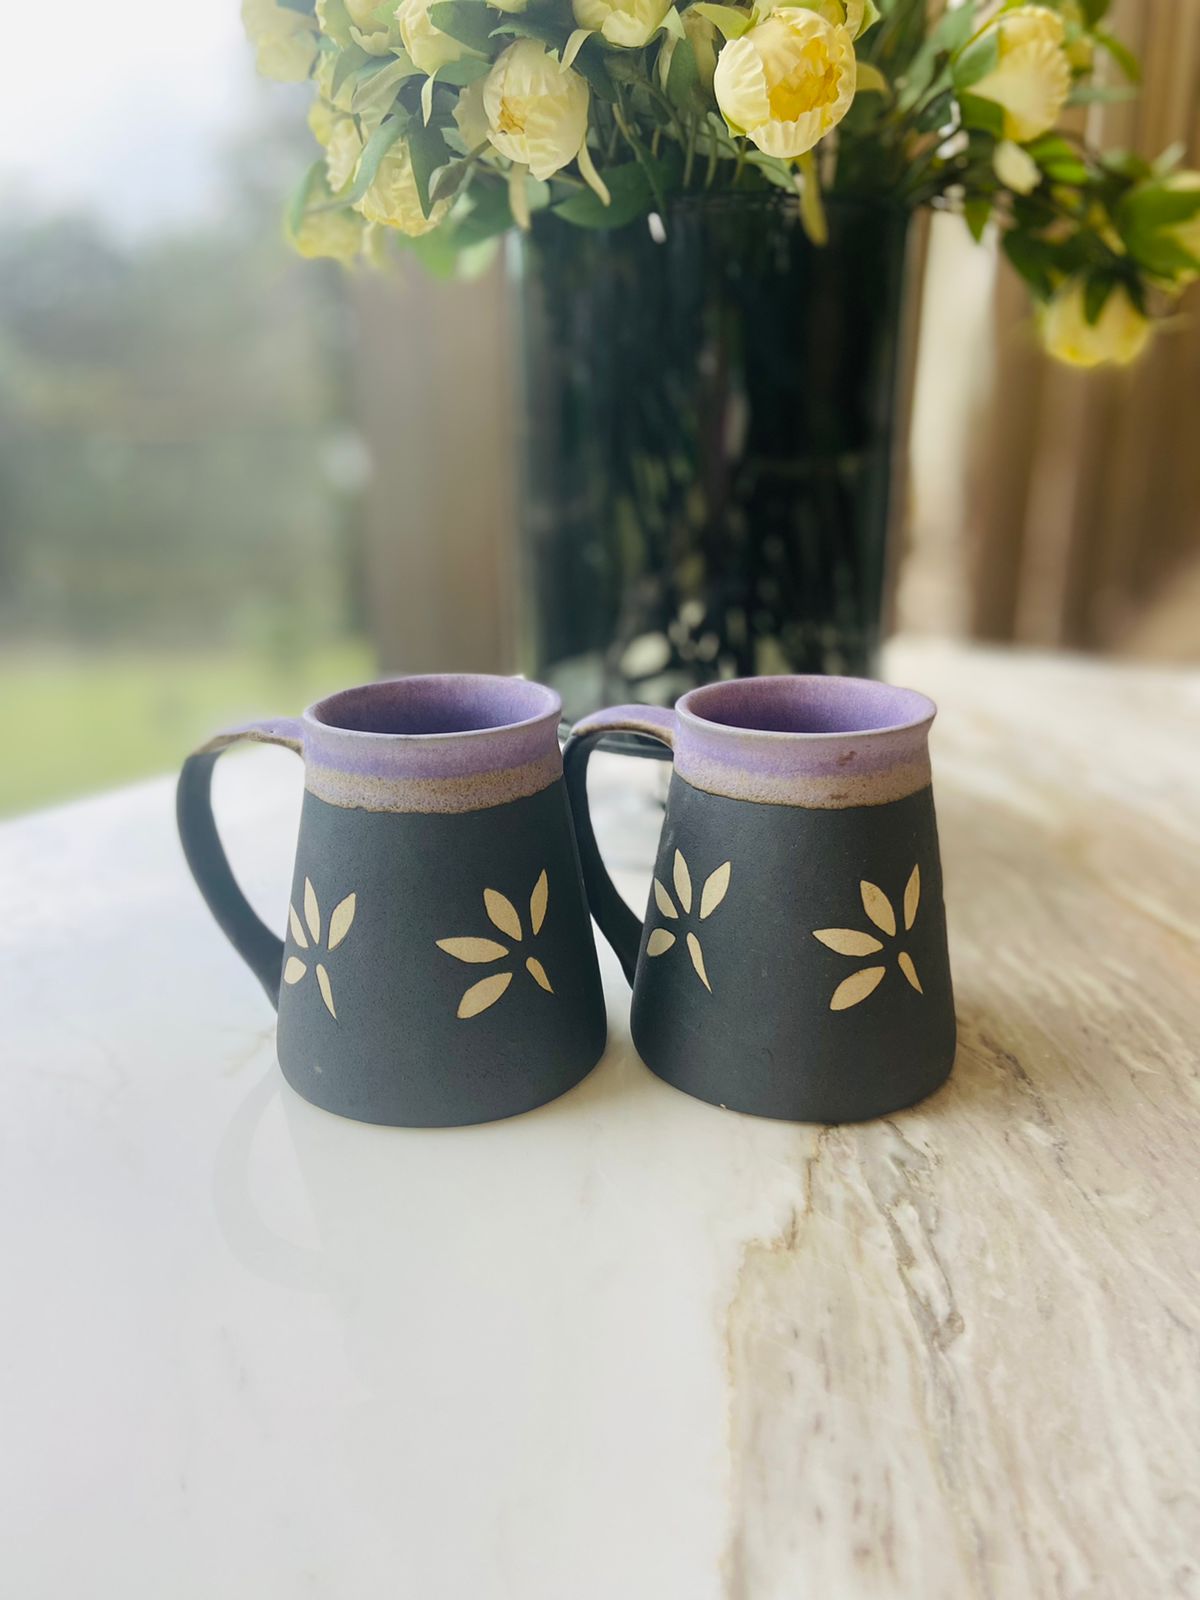 Mug - Black with Purple Border l Serving Coffee Mugs l Drink ware l Stylish Mugs l